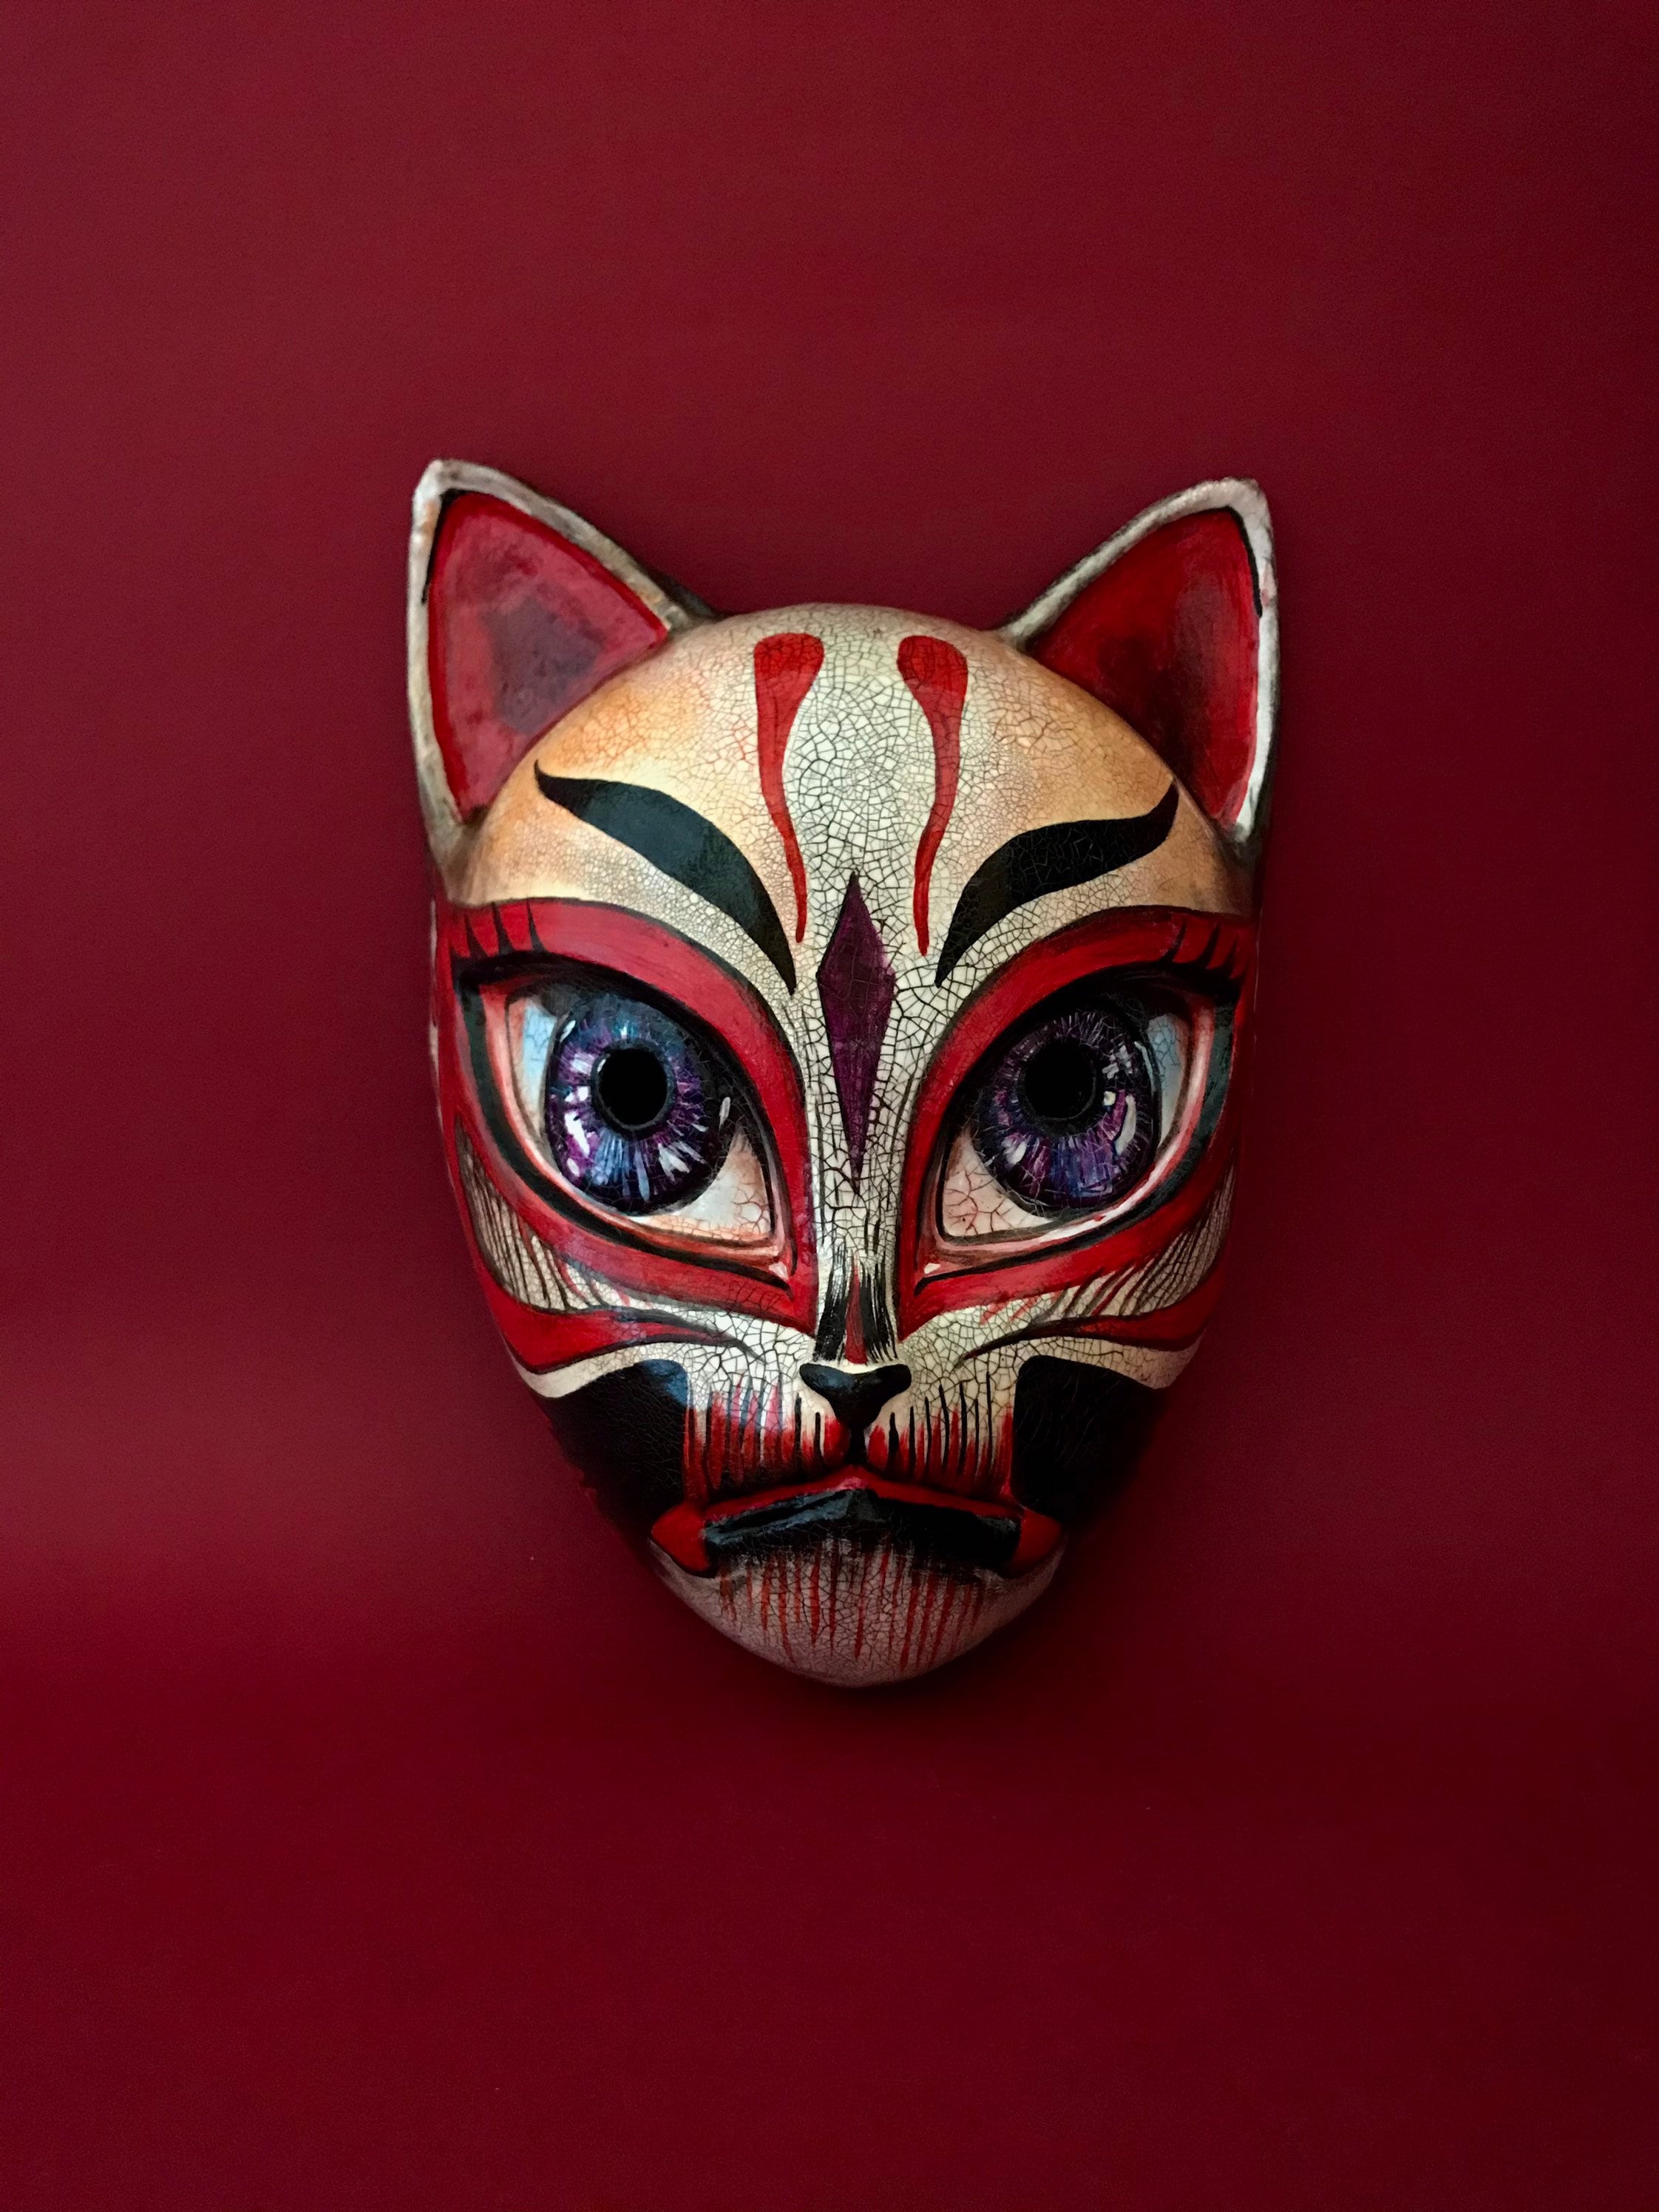 Red Kitsune Fox Mask